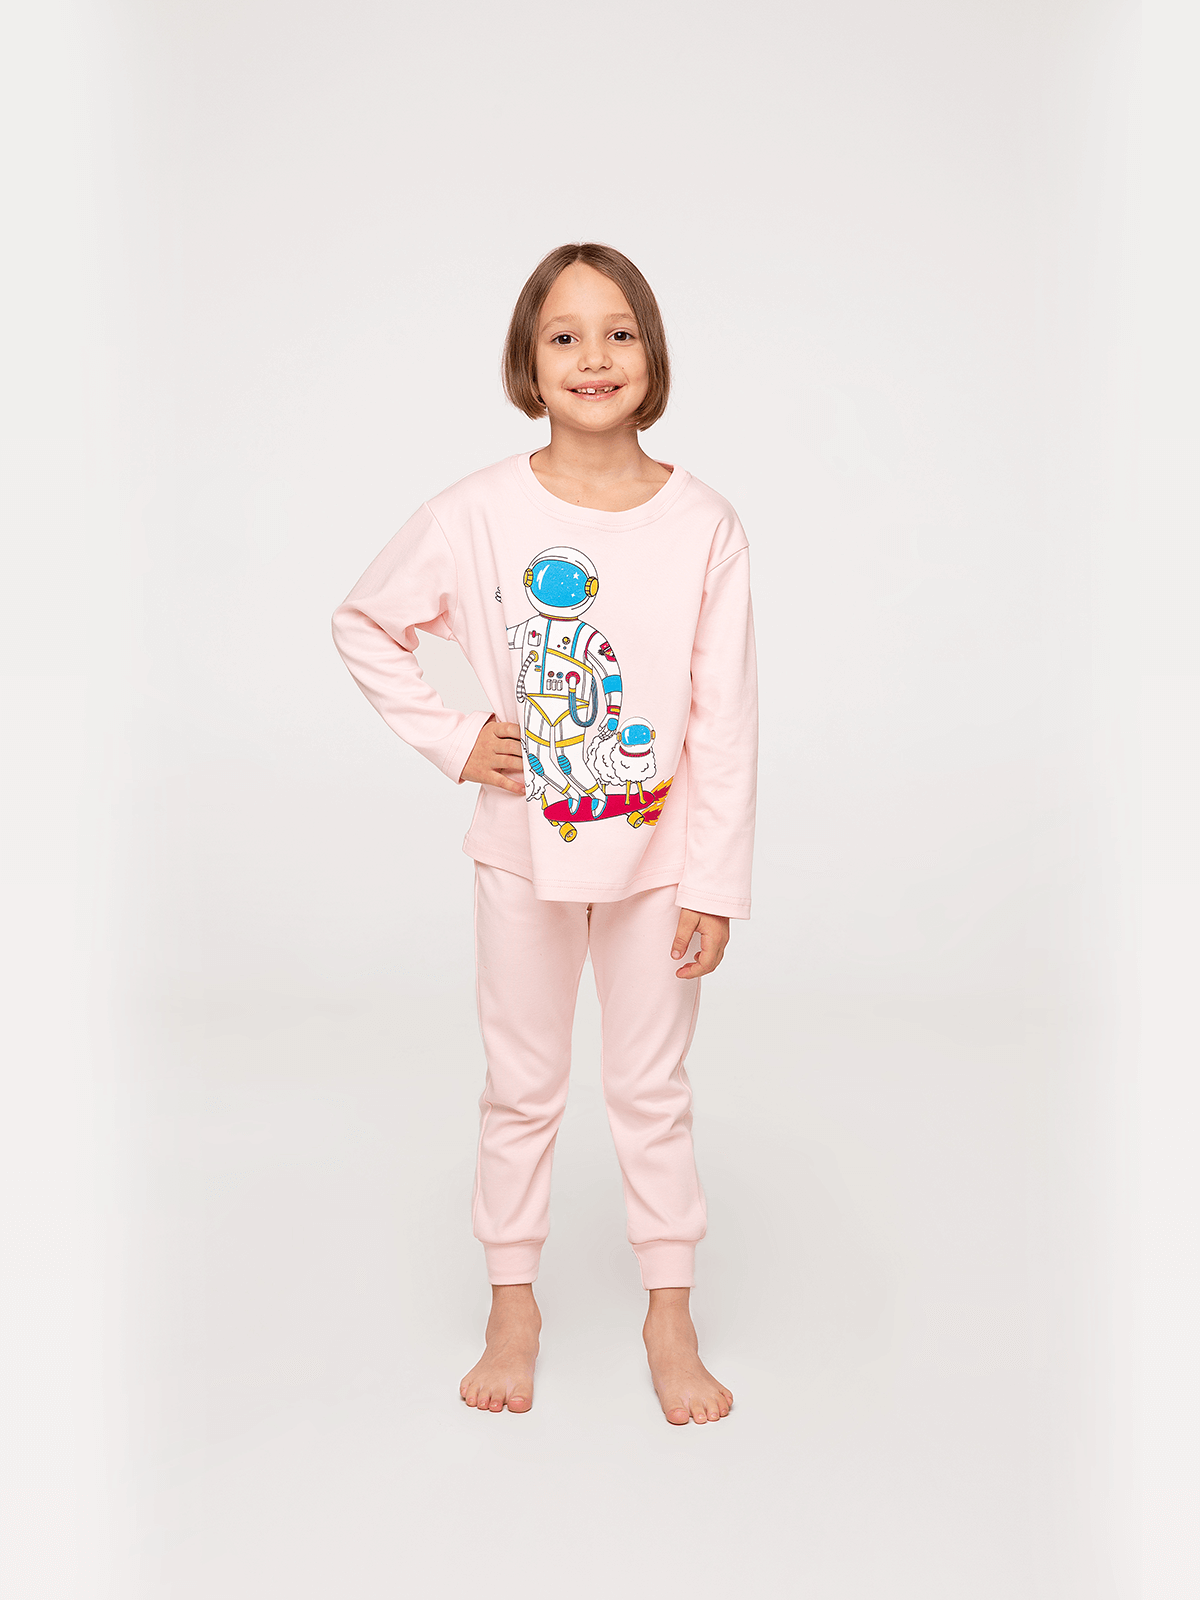 Kids Pajamas Space Shepherd. Color pale pink. 
Technique of prints applied: silkscreen printing.